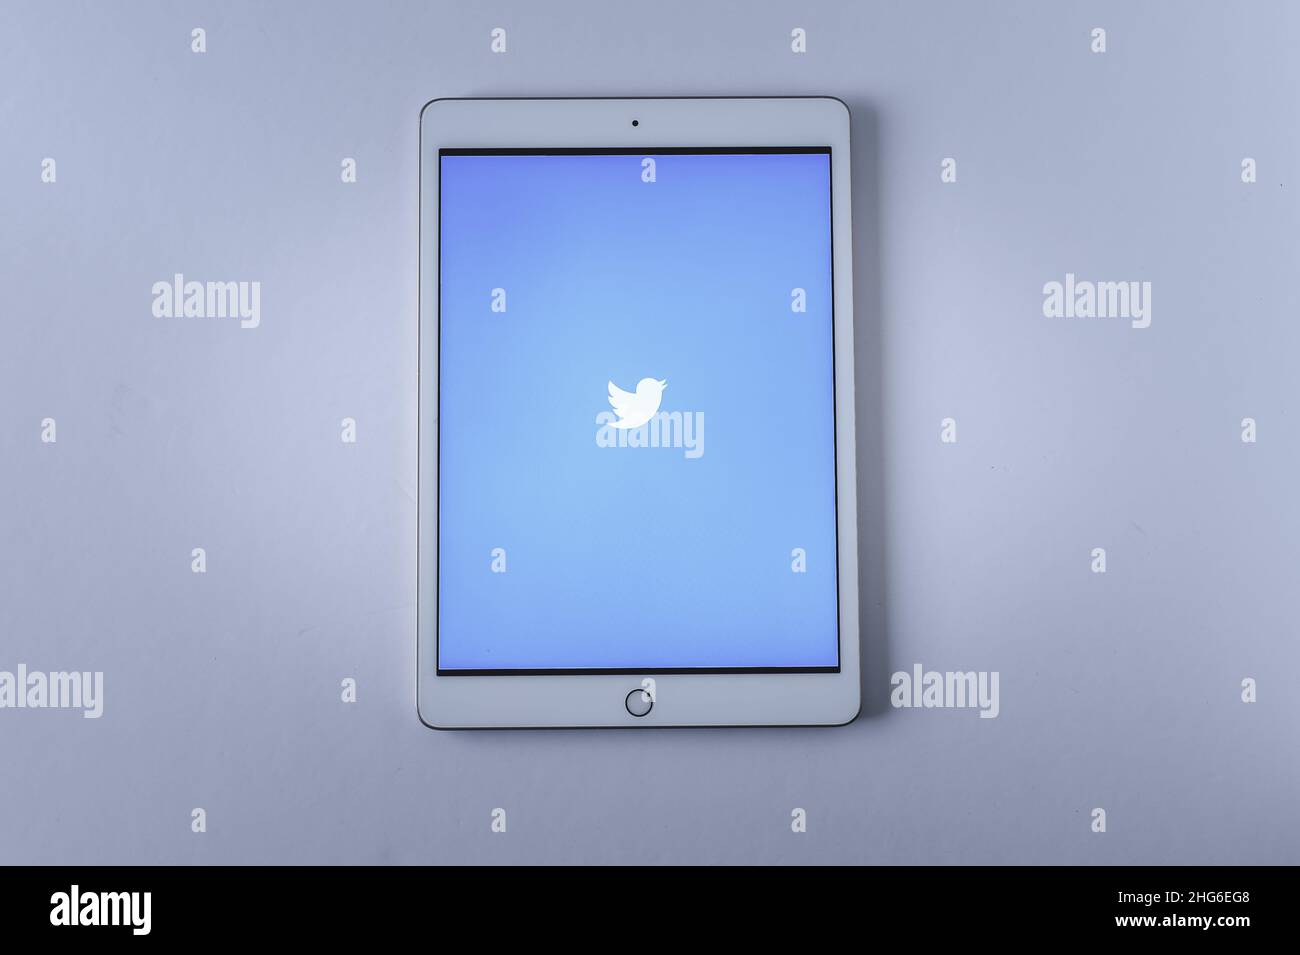 Redes sociales logos fotografías e imágenes de alta resolución - Alamy